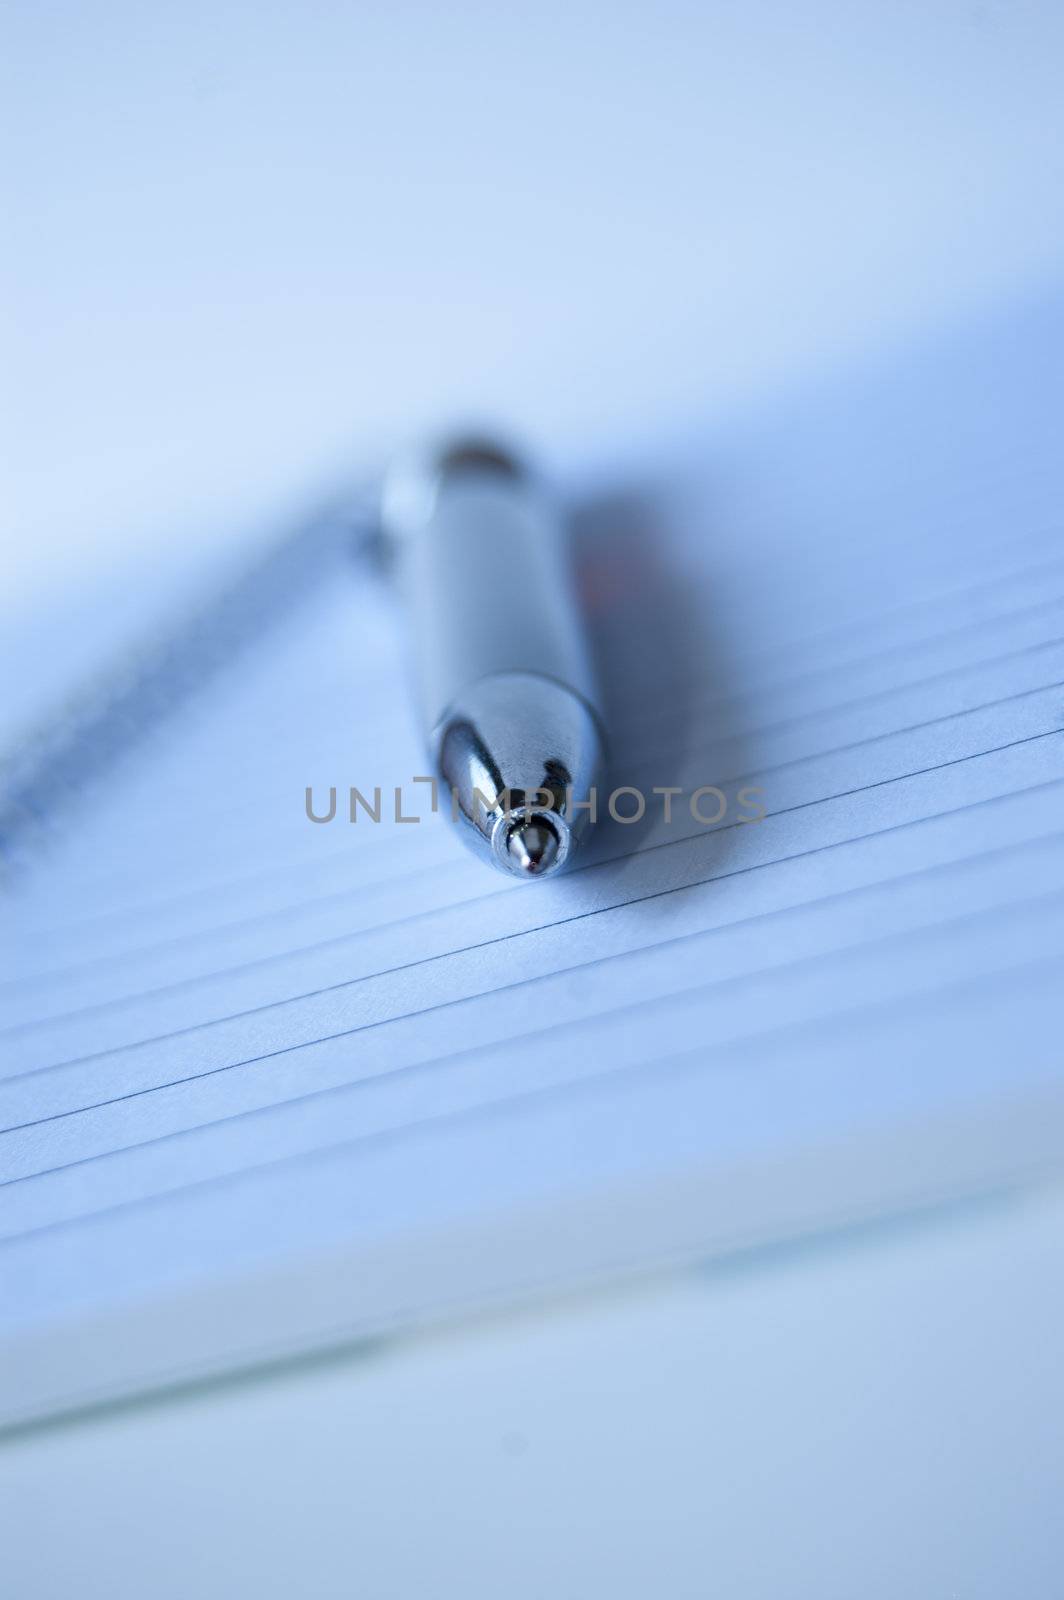 An elegant silver pen on a white book